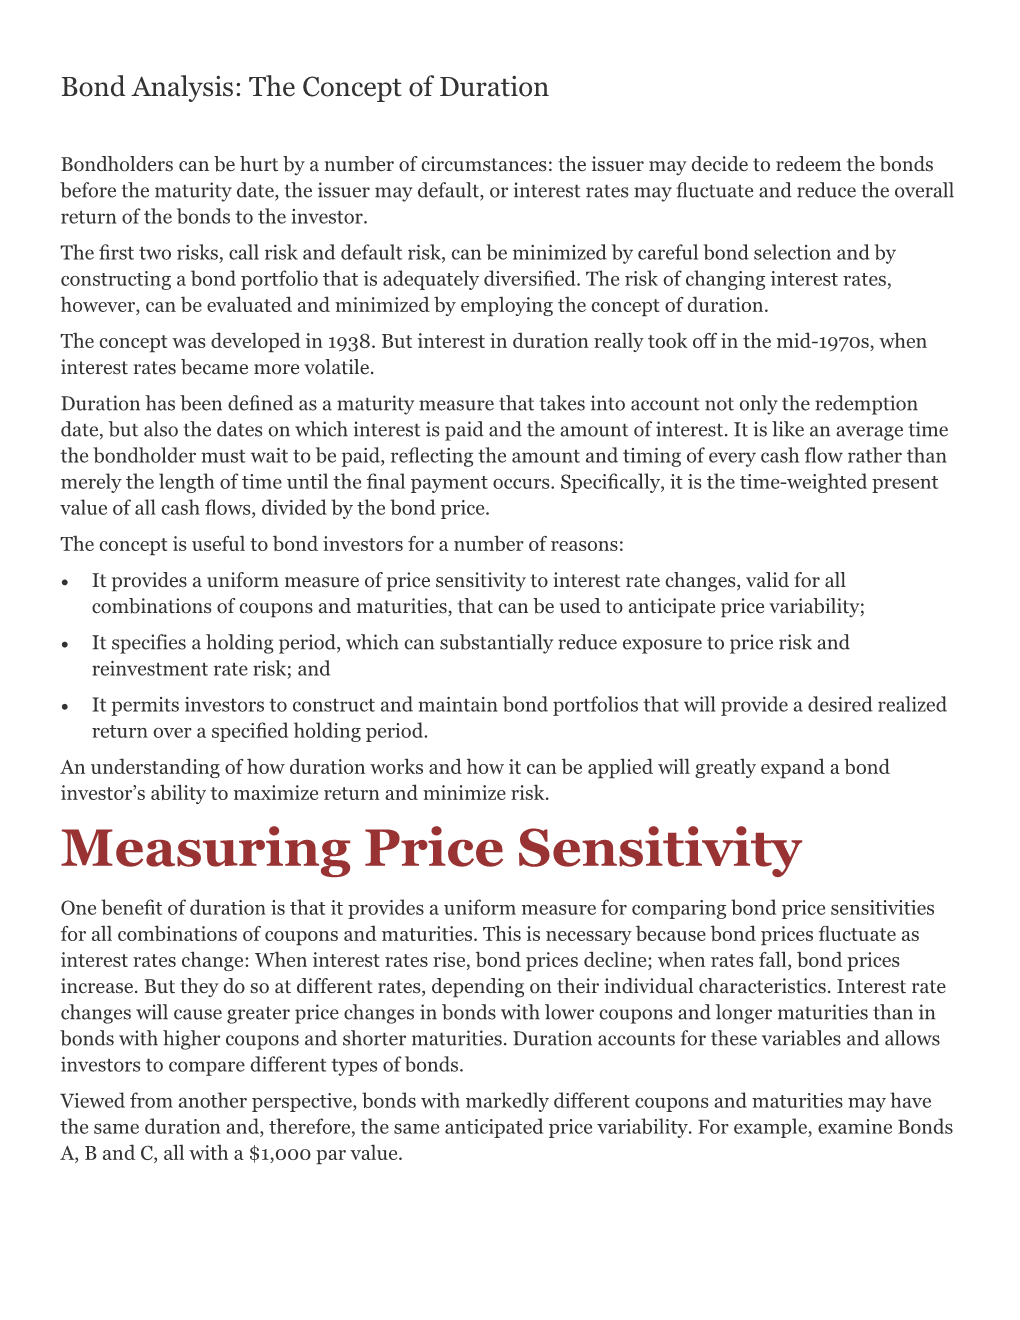 Measuring Price Sensitivity